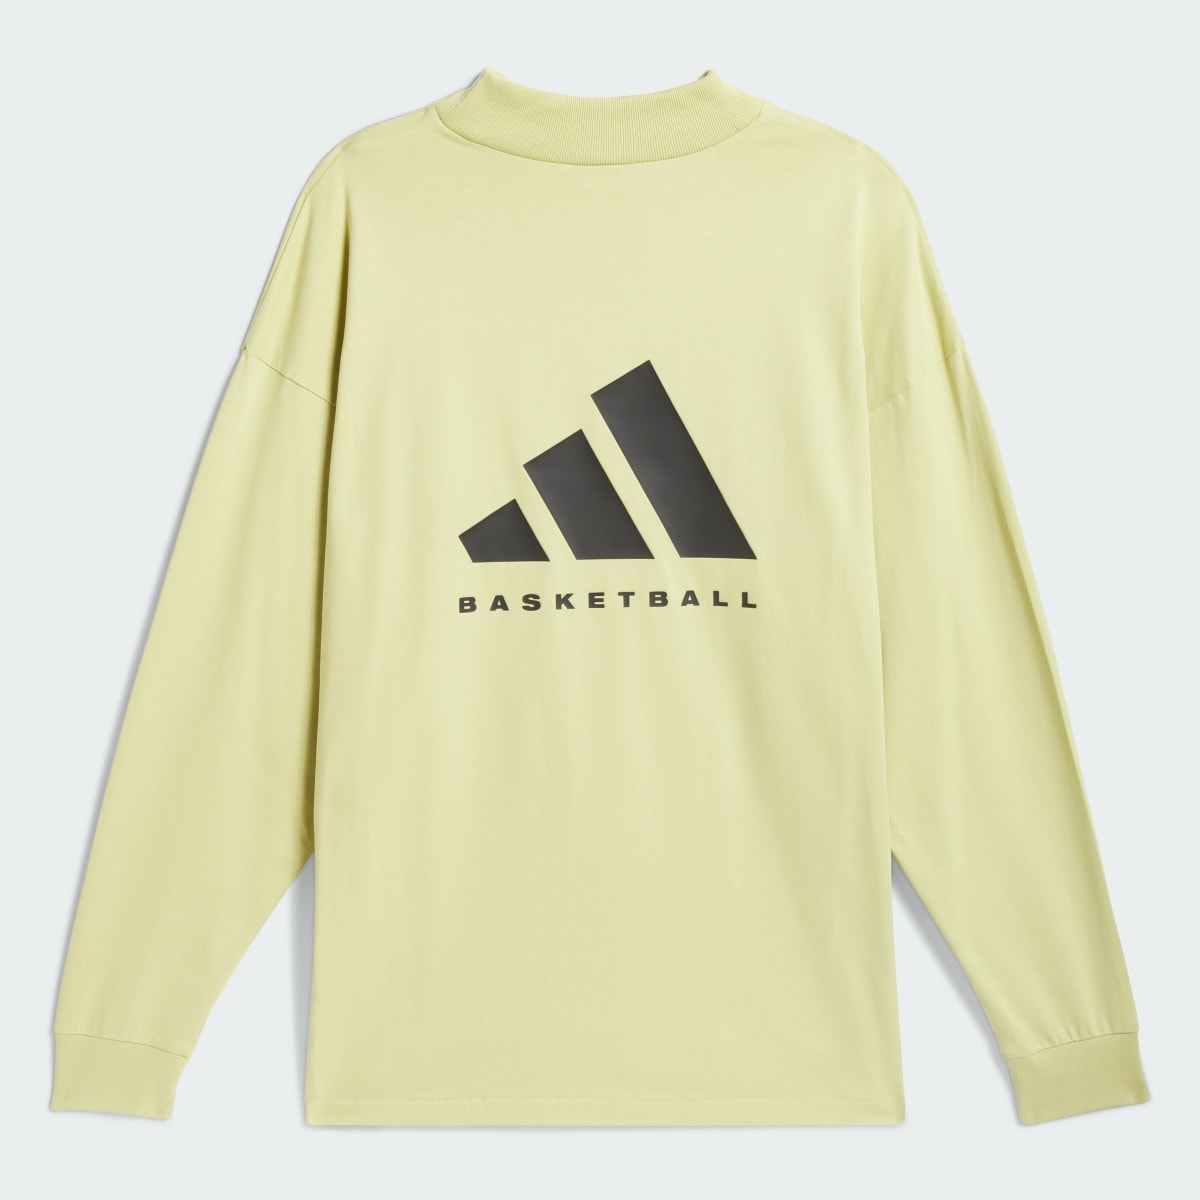 Adidas Basketball Long Sleeve Long-Sleeve Top. 5